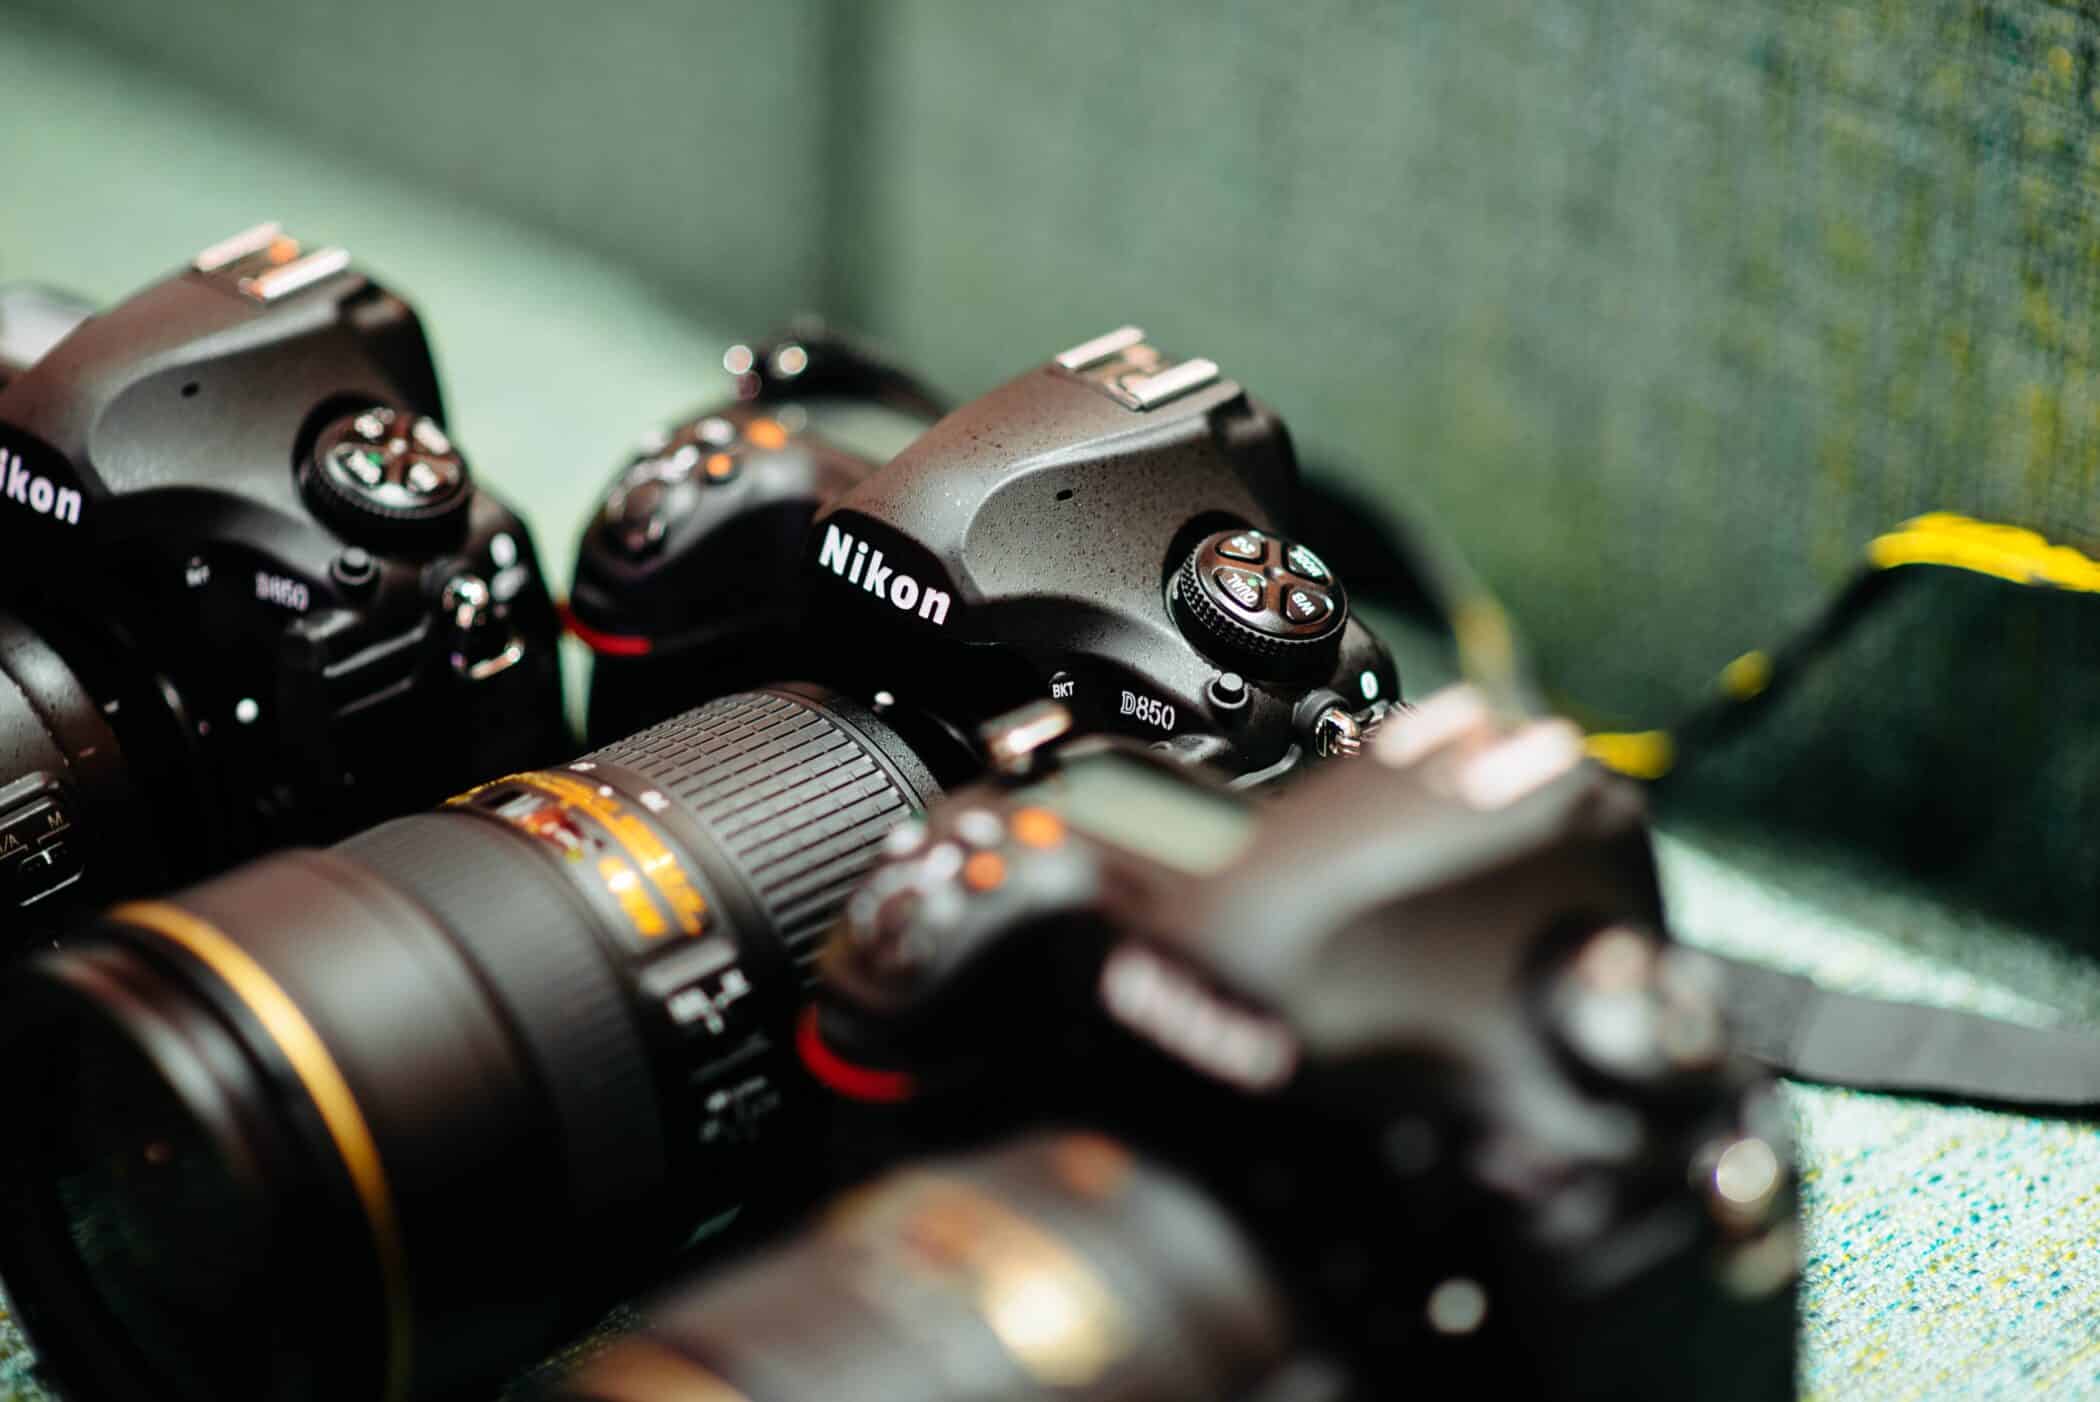 Nikon、Sony、Canonら、ディープフェイク画像を識別するための透かし技術をカメラに搭載へ